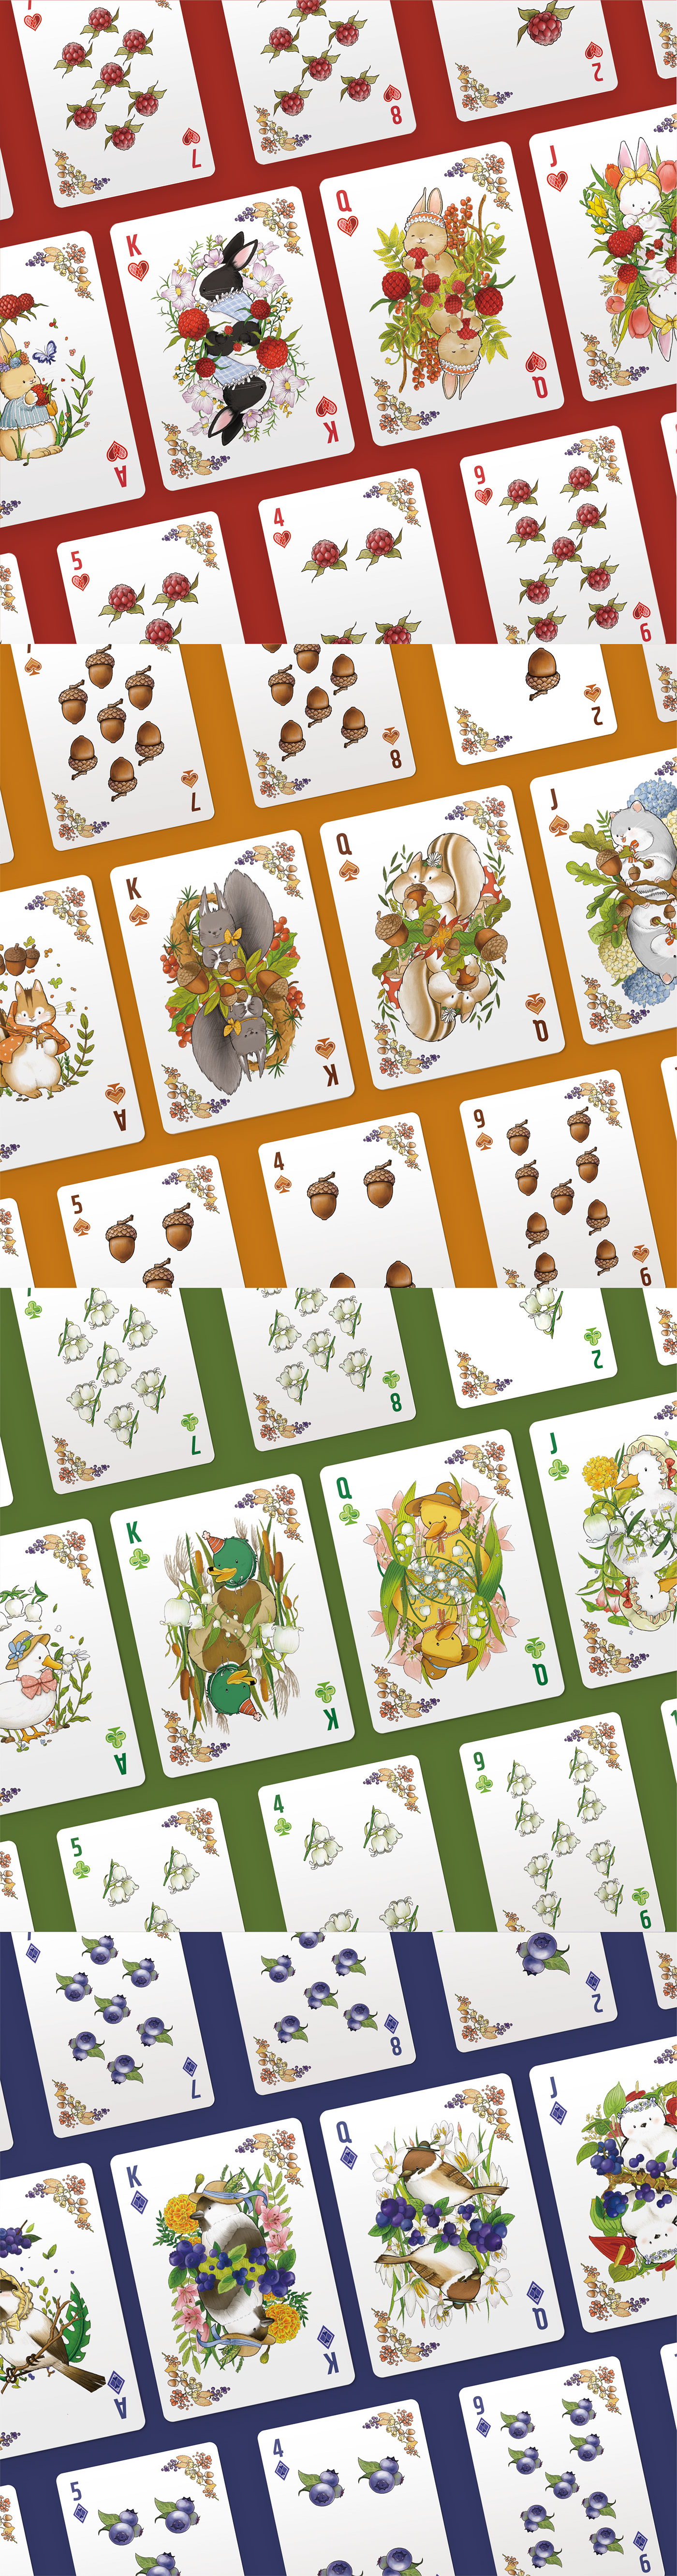 carddesign graphicdesign jokercard Onecard package packagedesign playingcard pokercard trumpcard